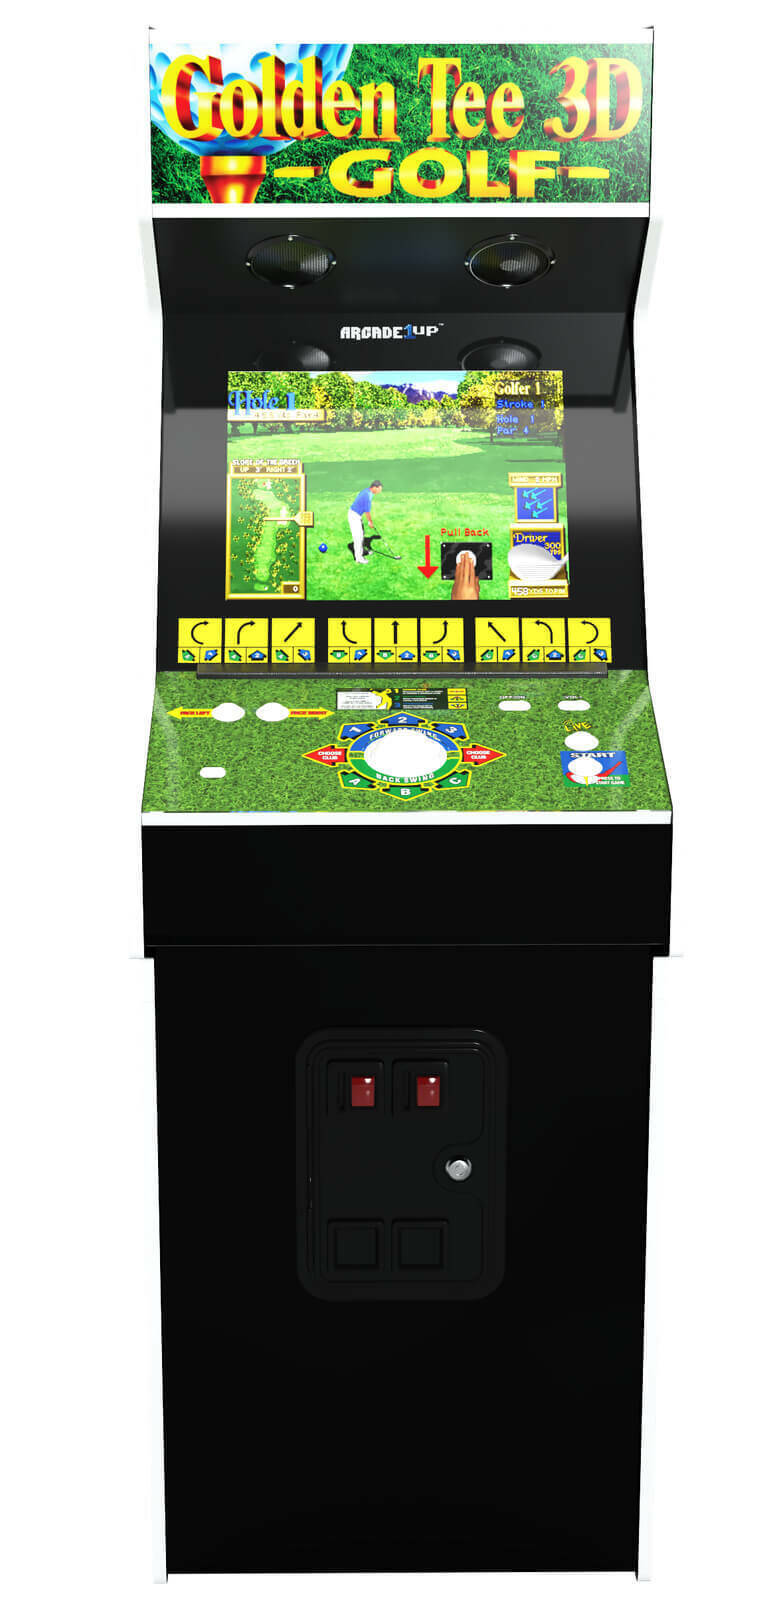 Arcade1Up Golden Tee 3D Golf Arcade Machine